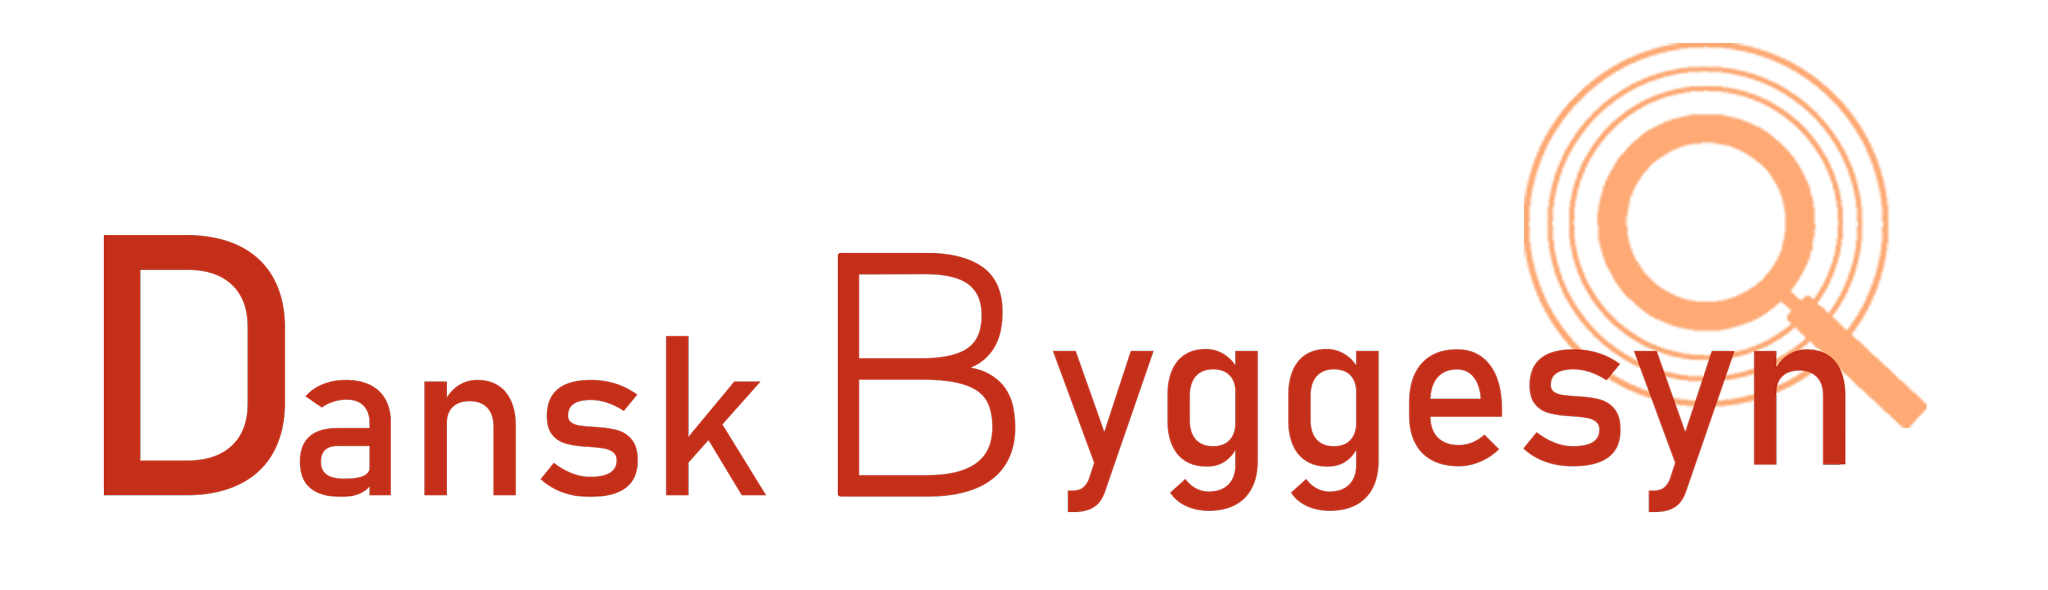 logo dansk byggesyn